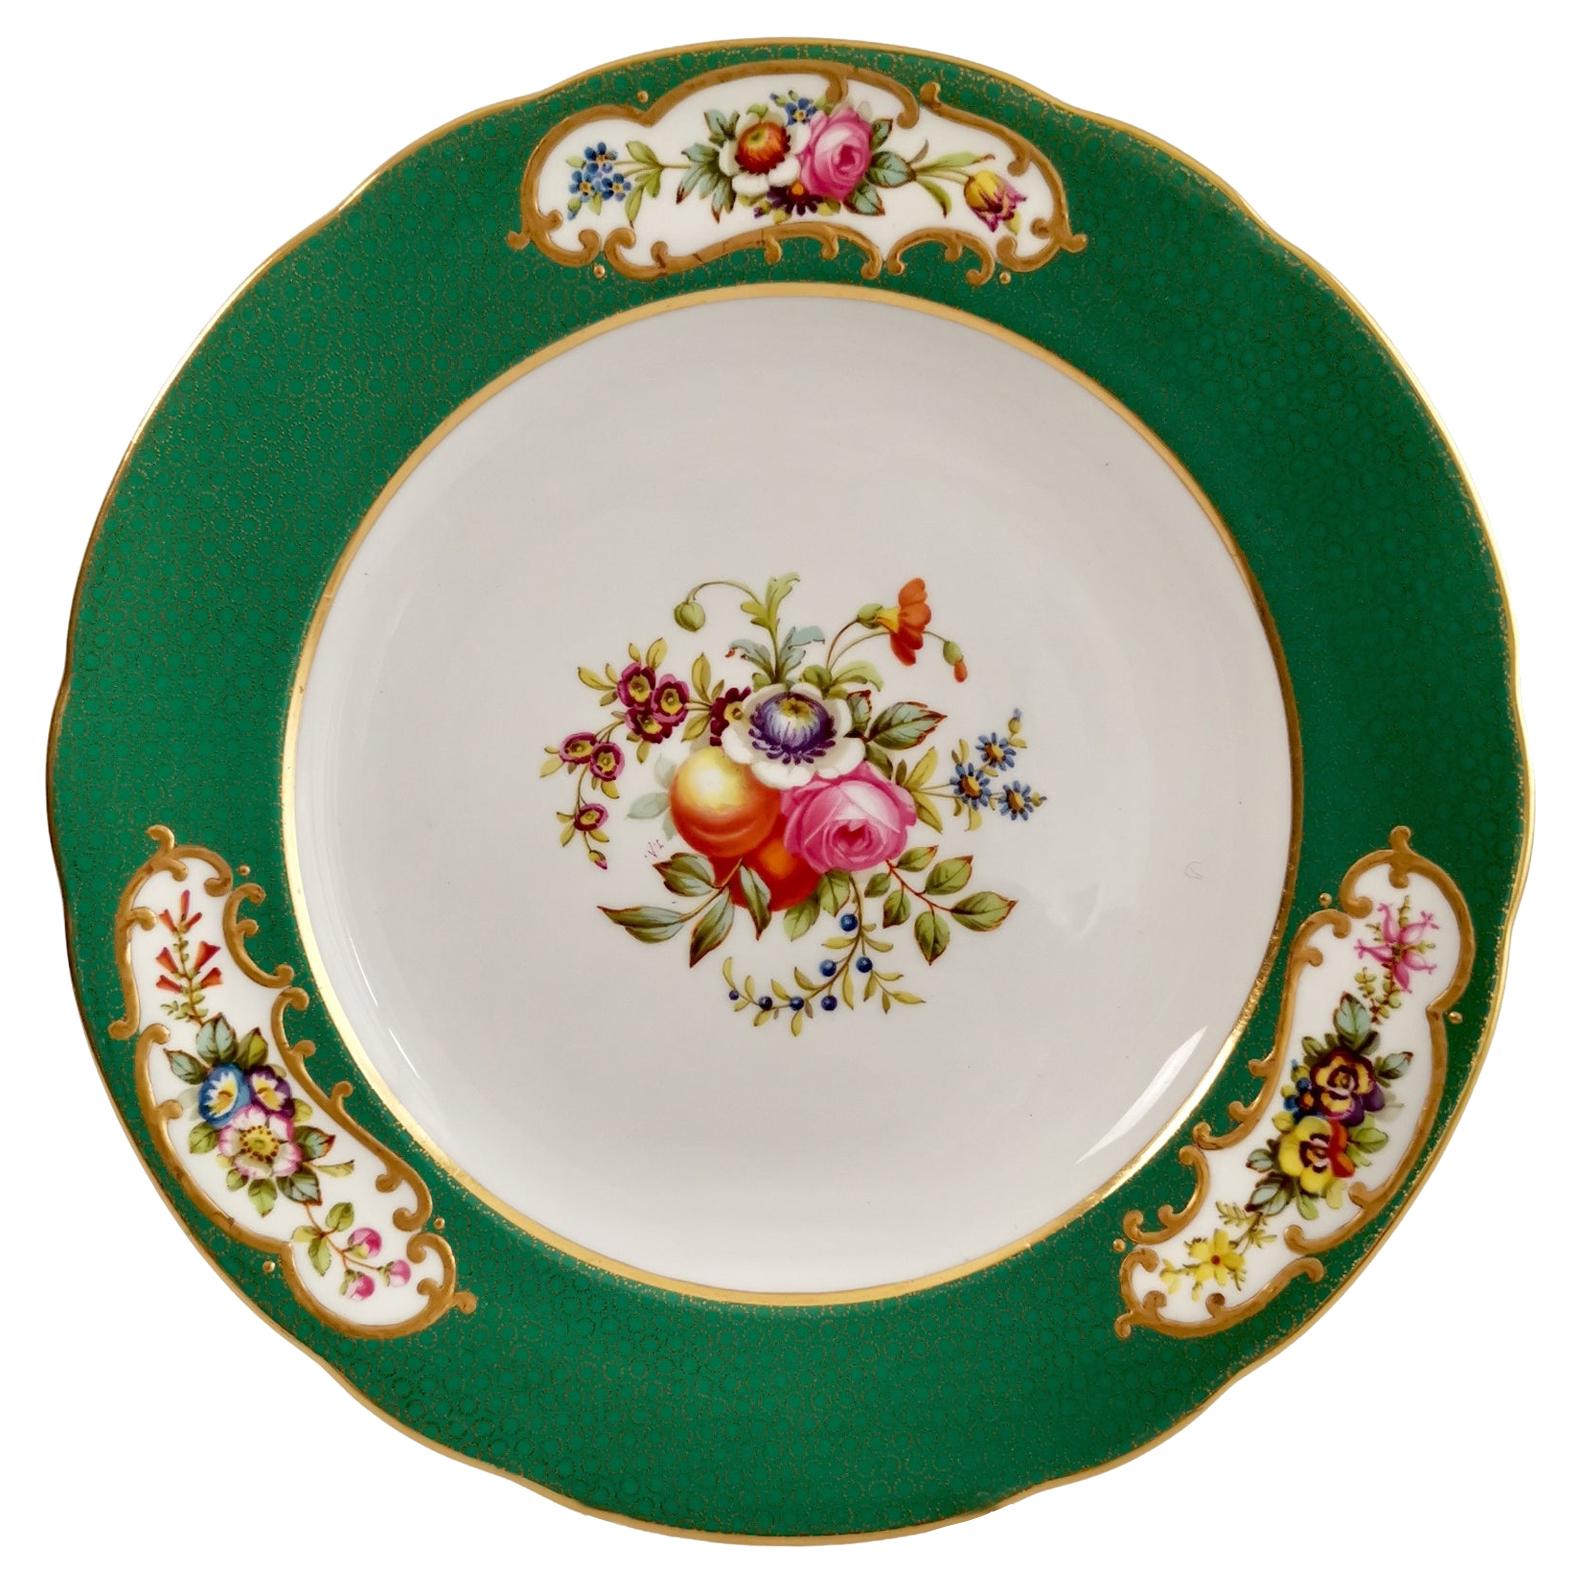 Copeland Spode Porcelain Plate, Green Sèvres Style, Flowers, Thomas Goode, 1924